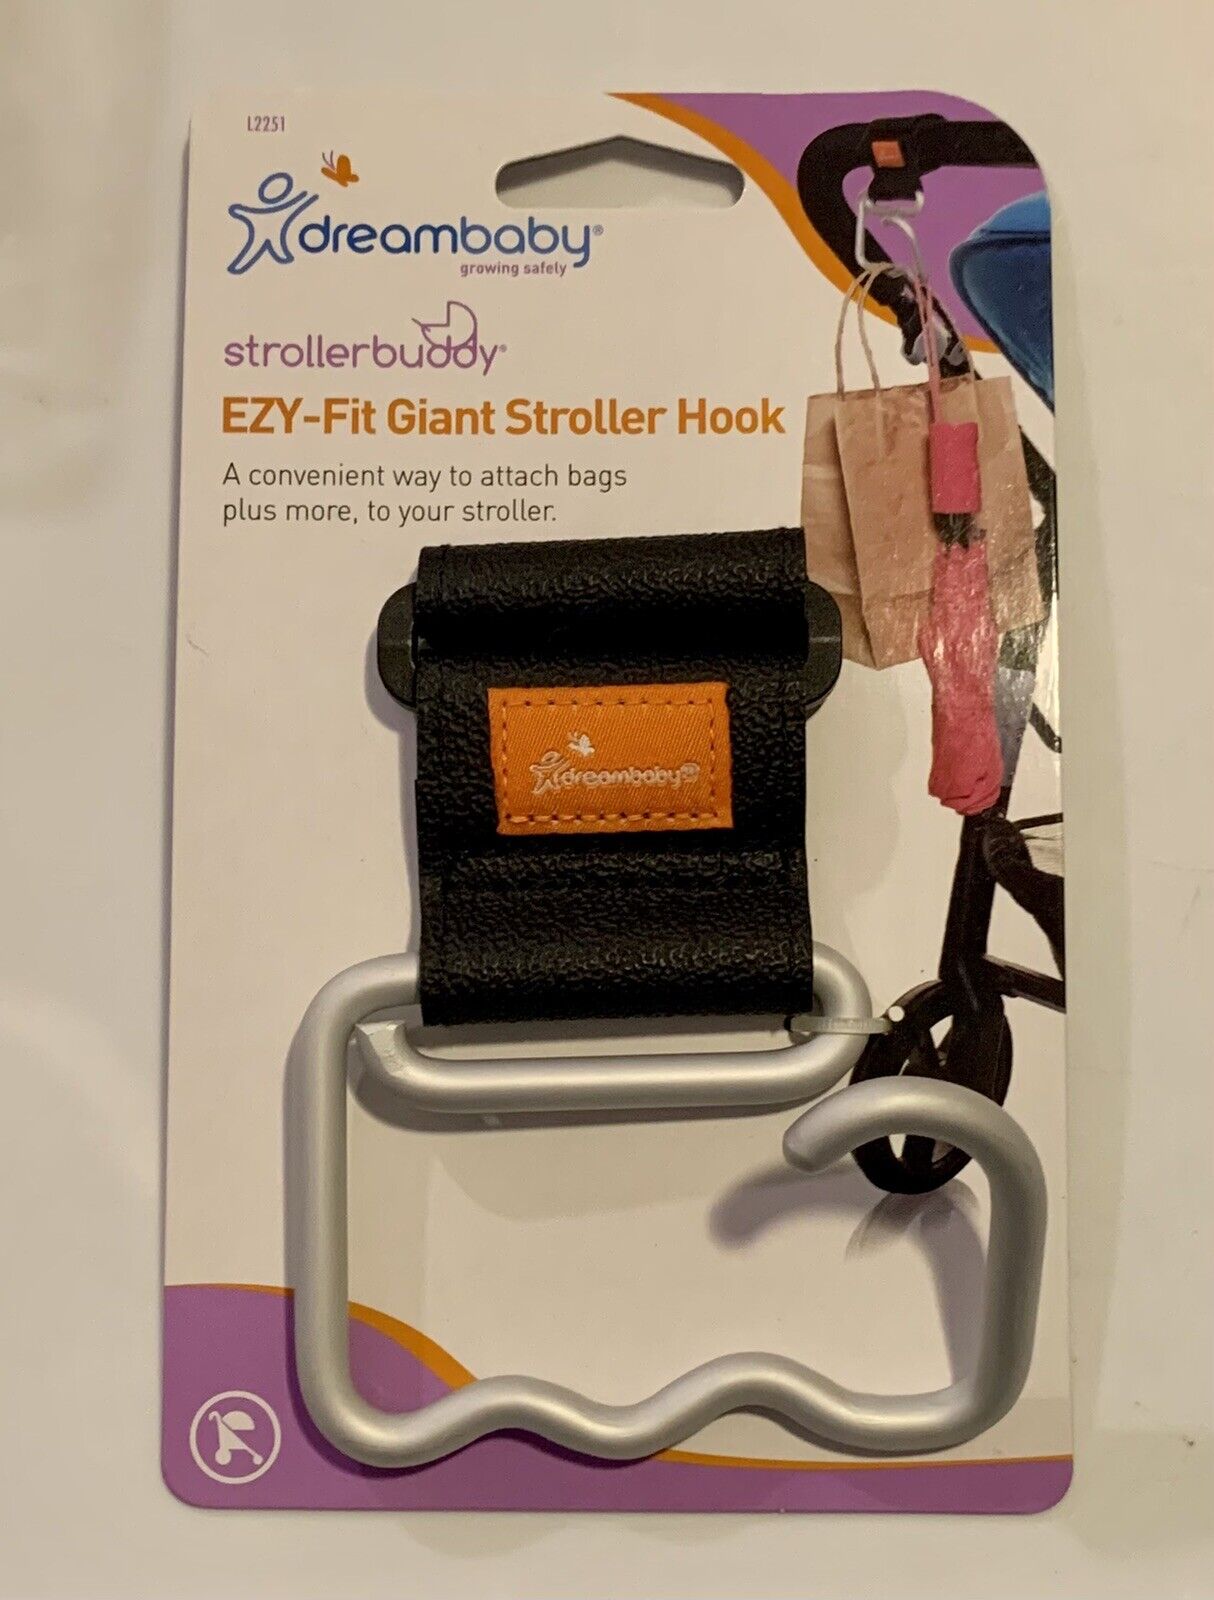 Dreambaby Ezy Fit Giant Stroller Hook Stroller Buddy Accessory New, Silver Black